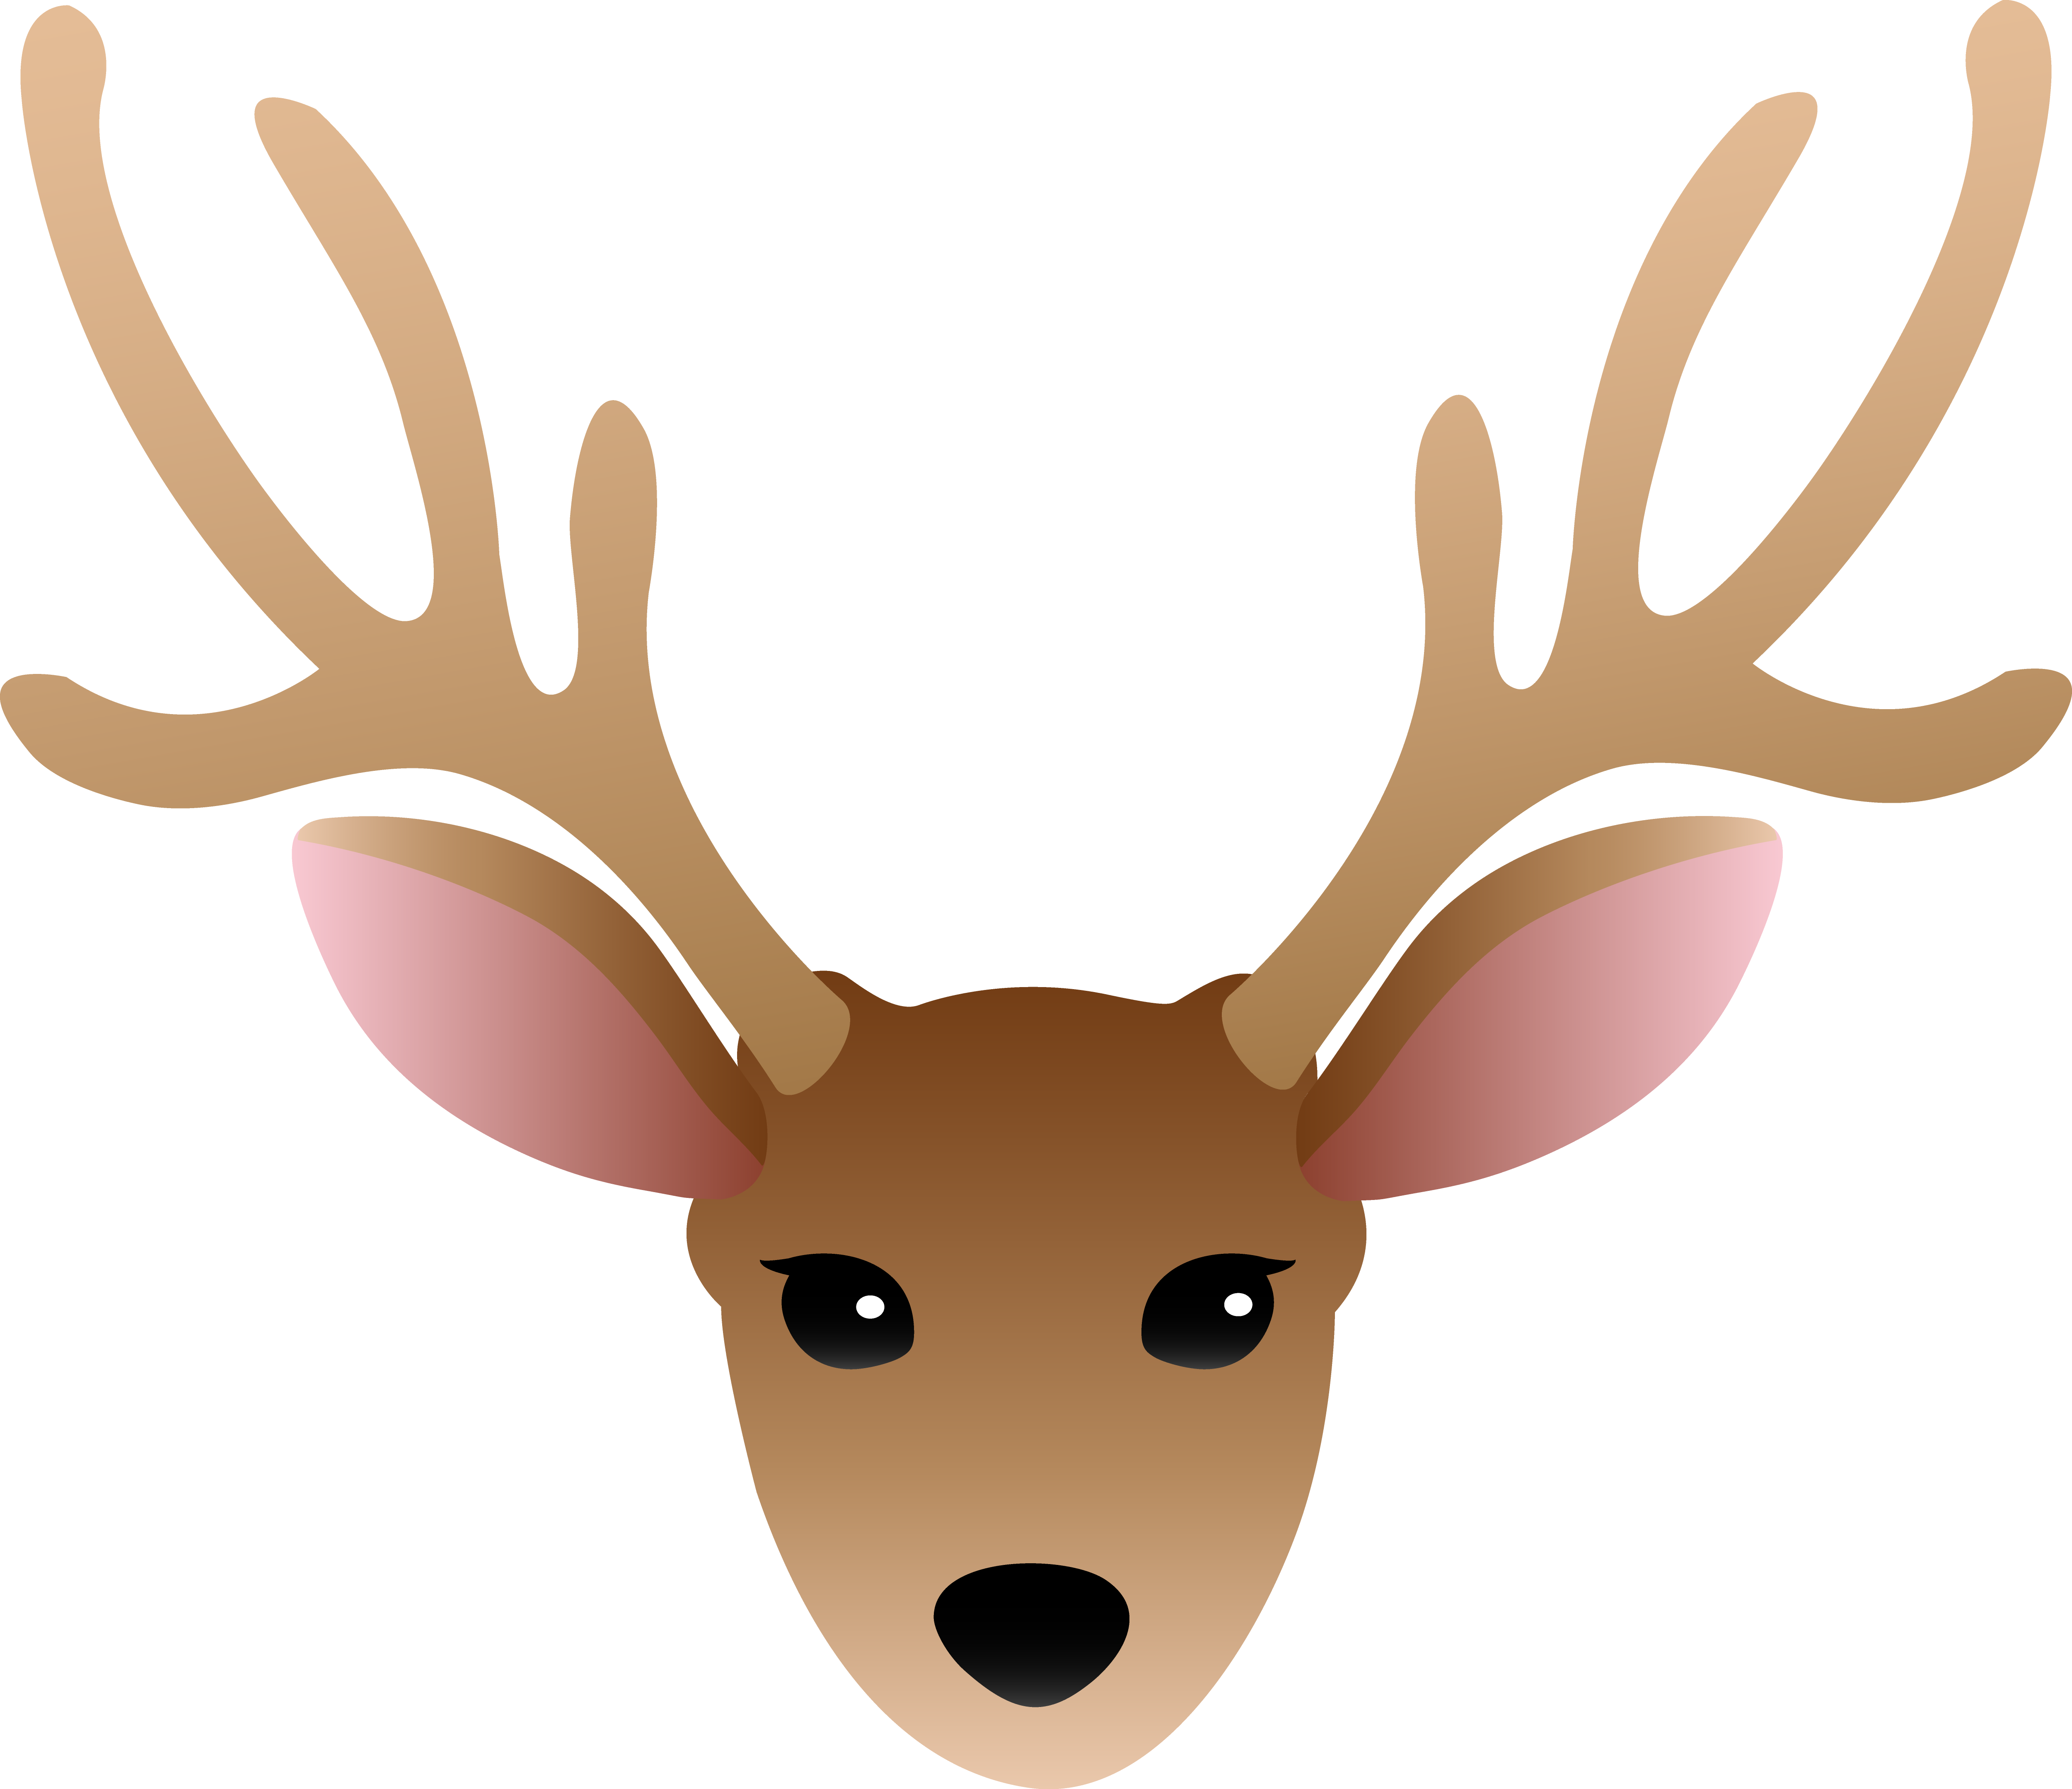 Antlers clipart cute. Simple deer pencil and